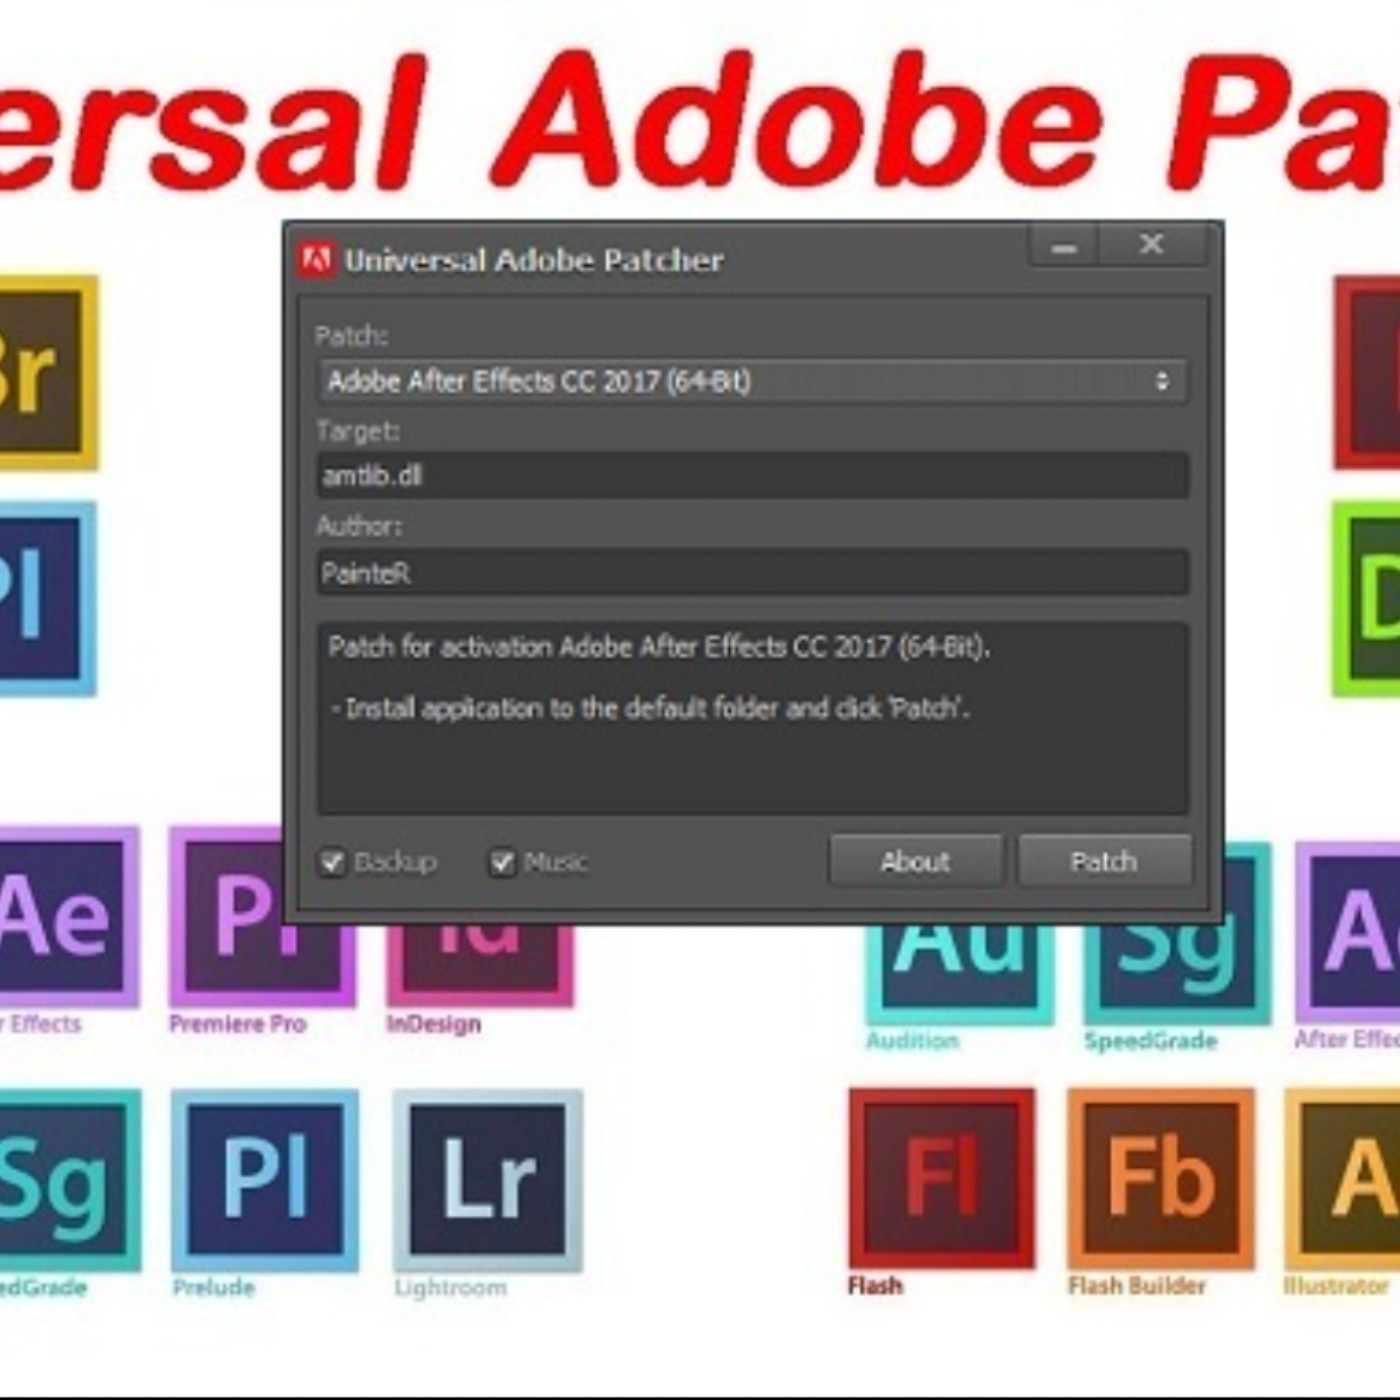 Adobe patcher